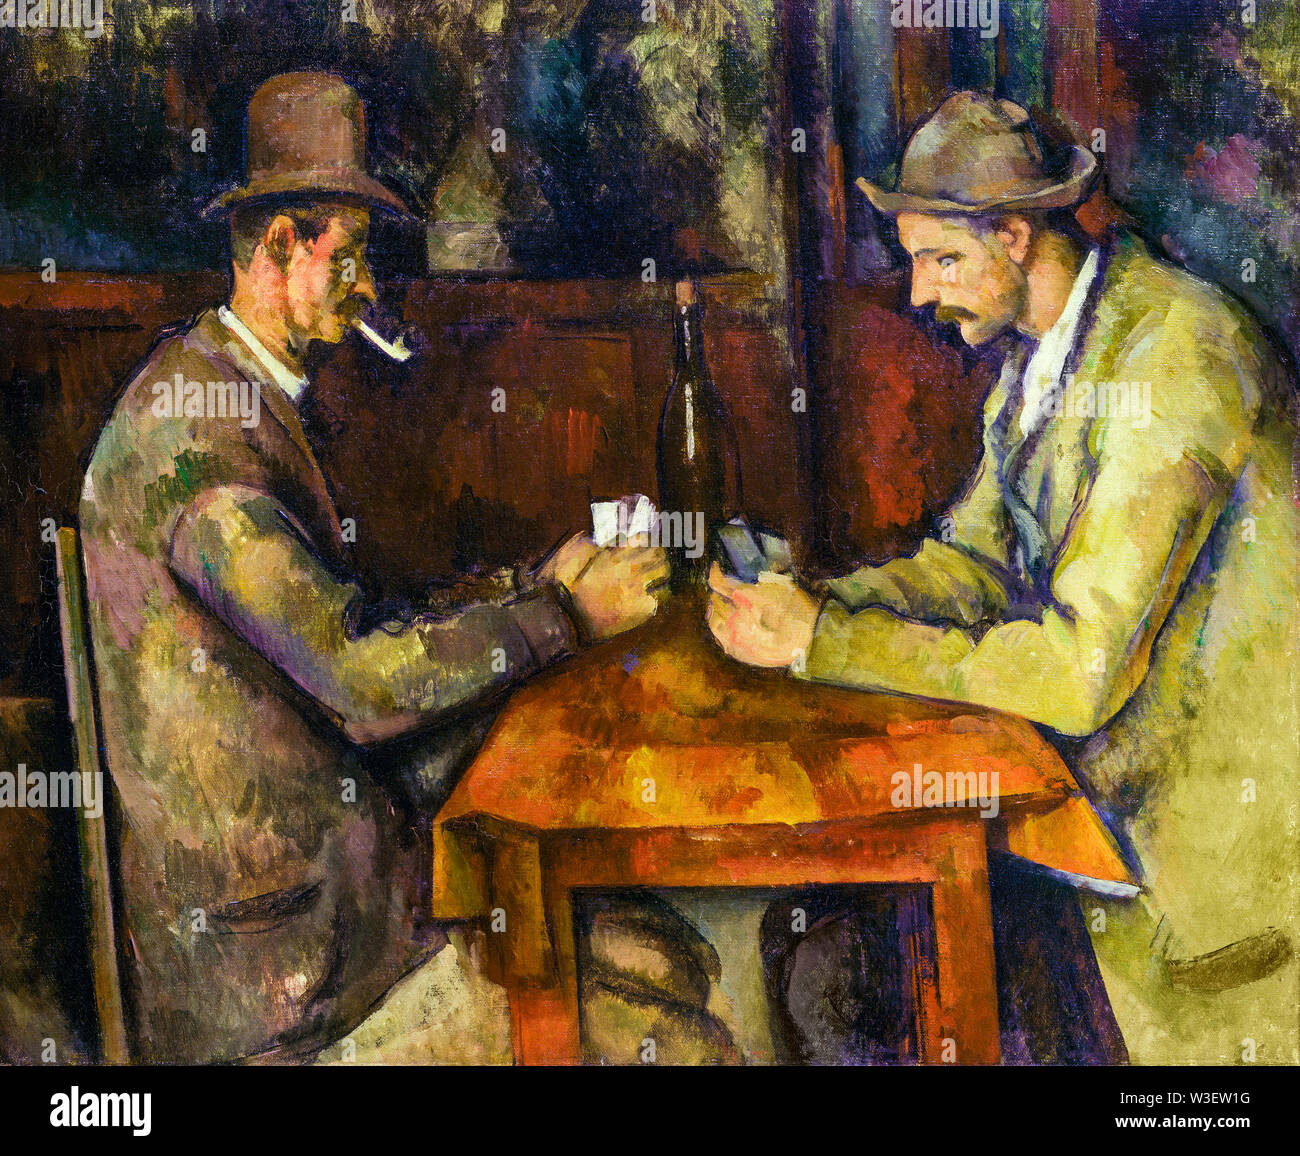 Paul Cézanne, The Card Players, pittura post-impressionista, 1894-1895 Foto Stock